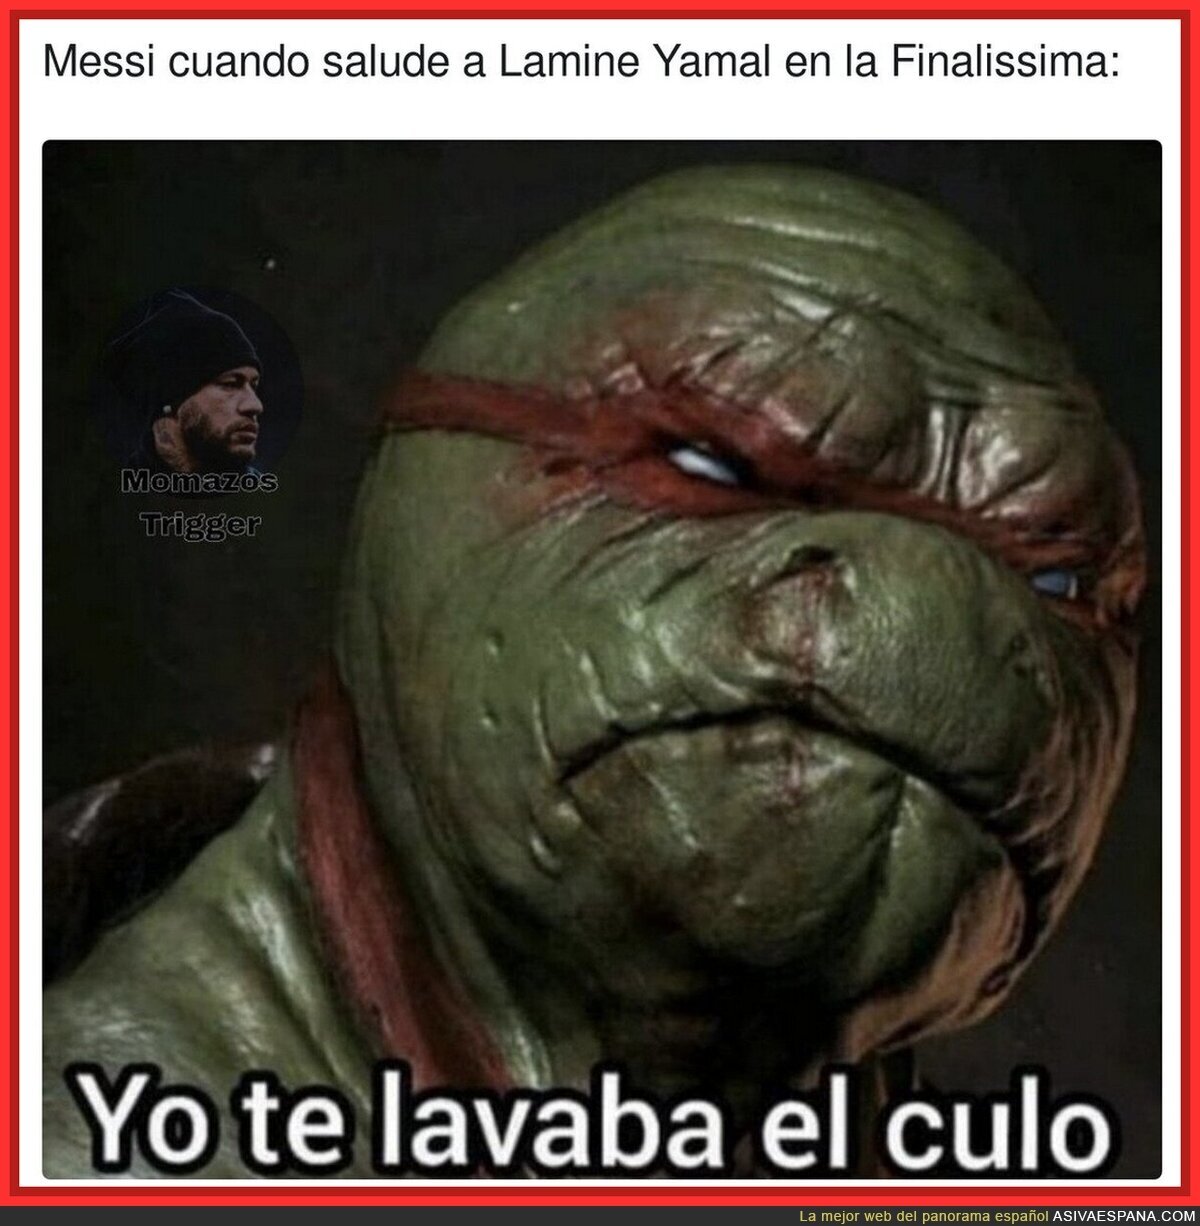 Deseando ver a Messi junto a Lamine Yamal